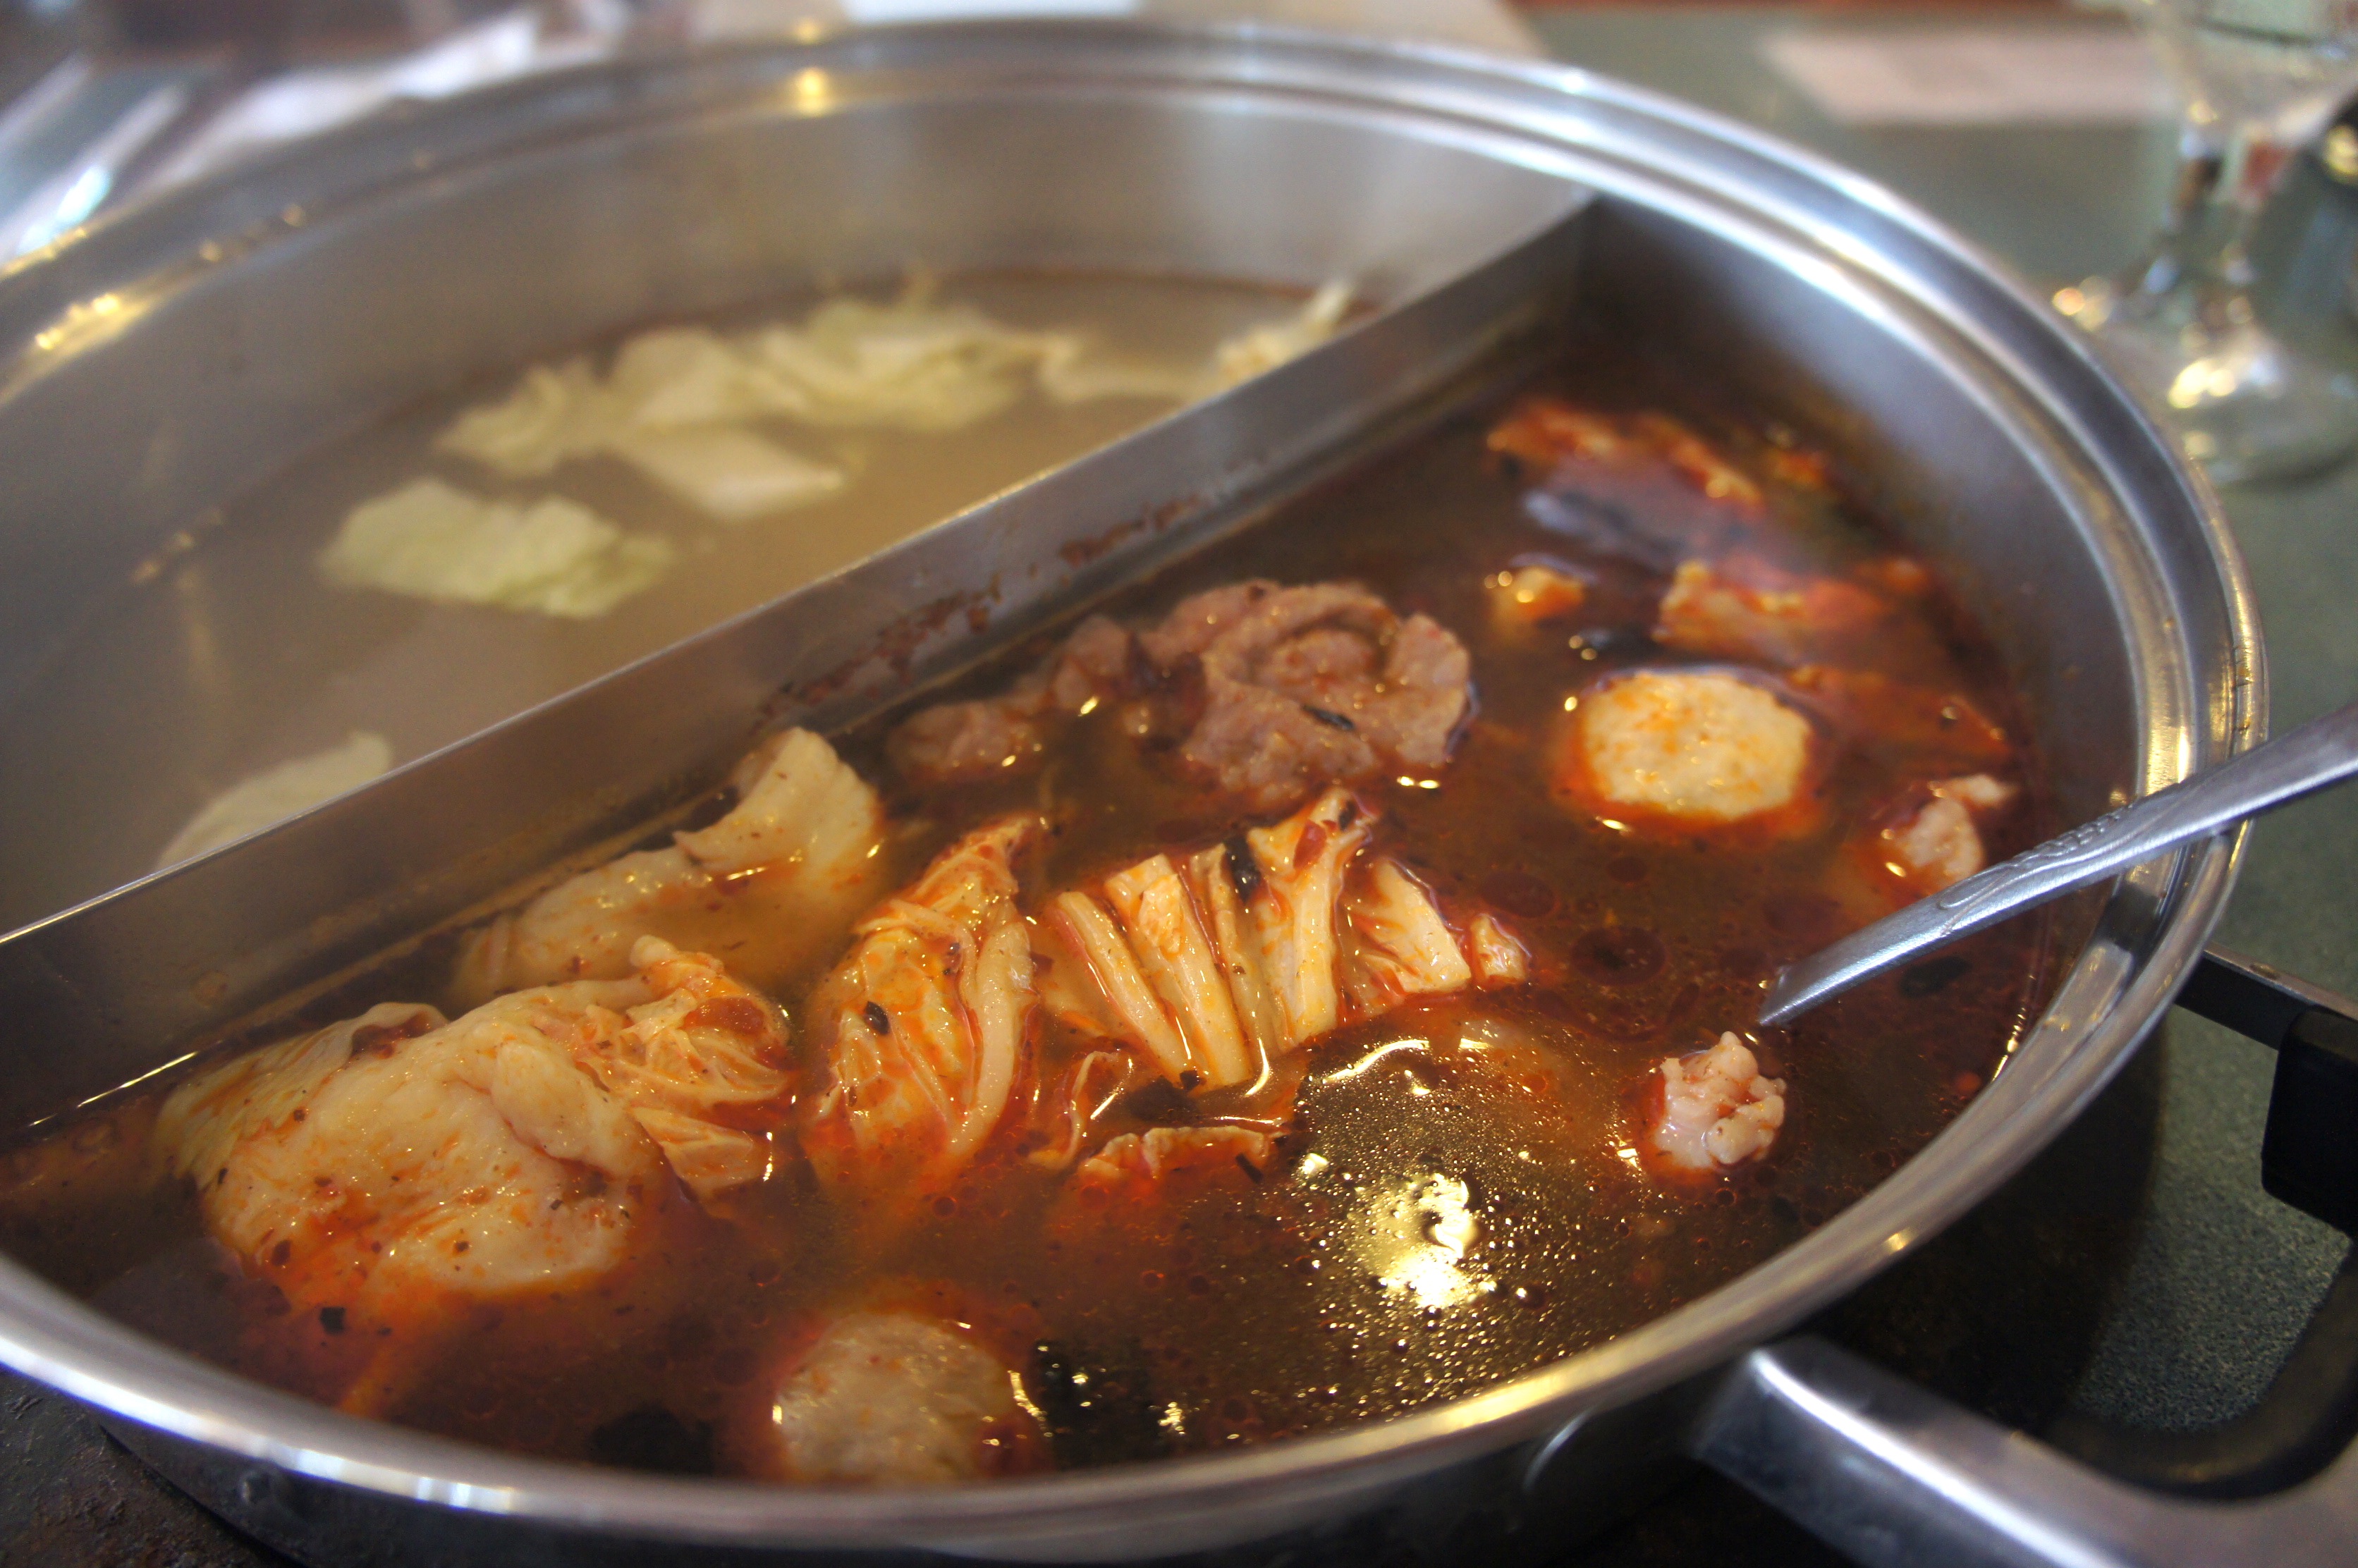 Hotto Potto – Chinese style “fondue” aka hot pot in Orlando